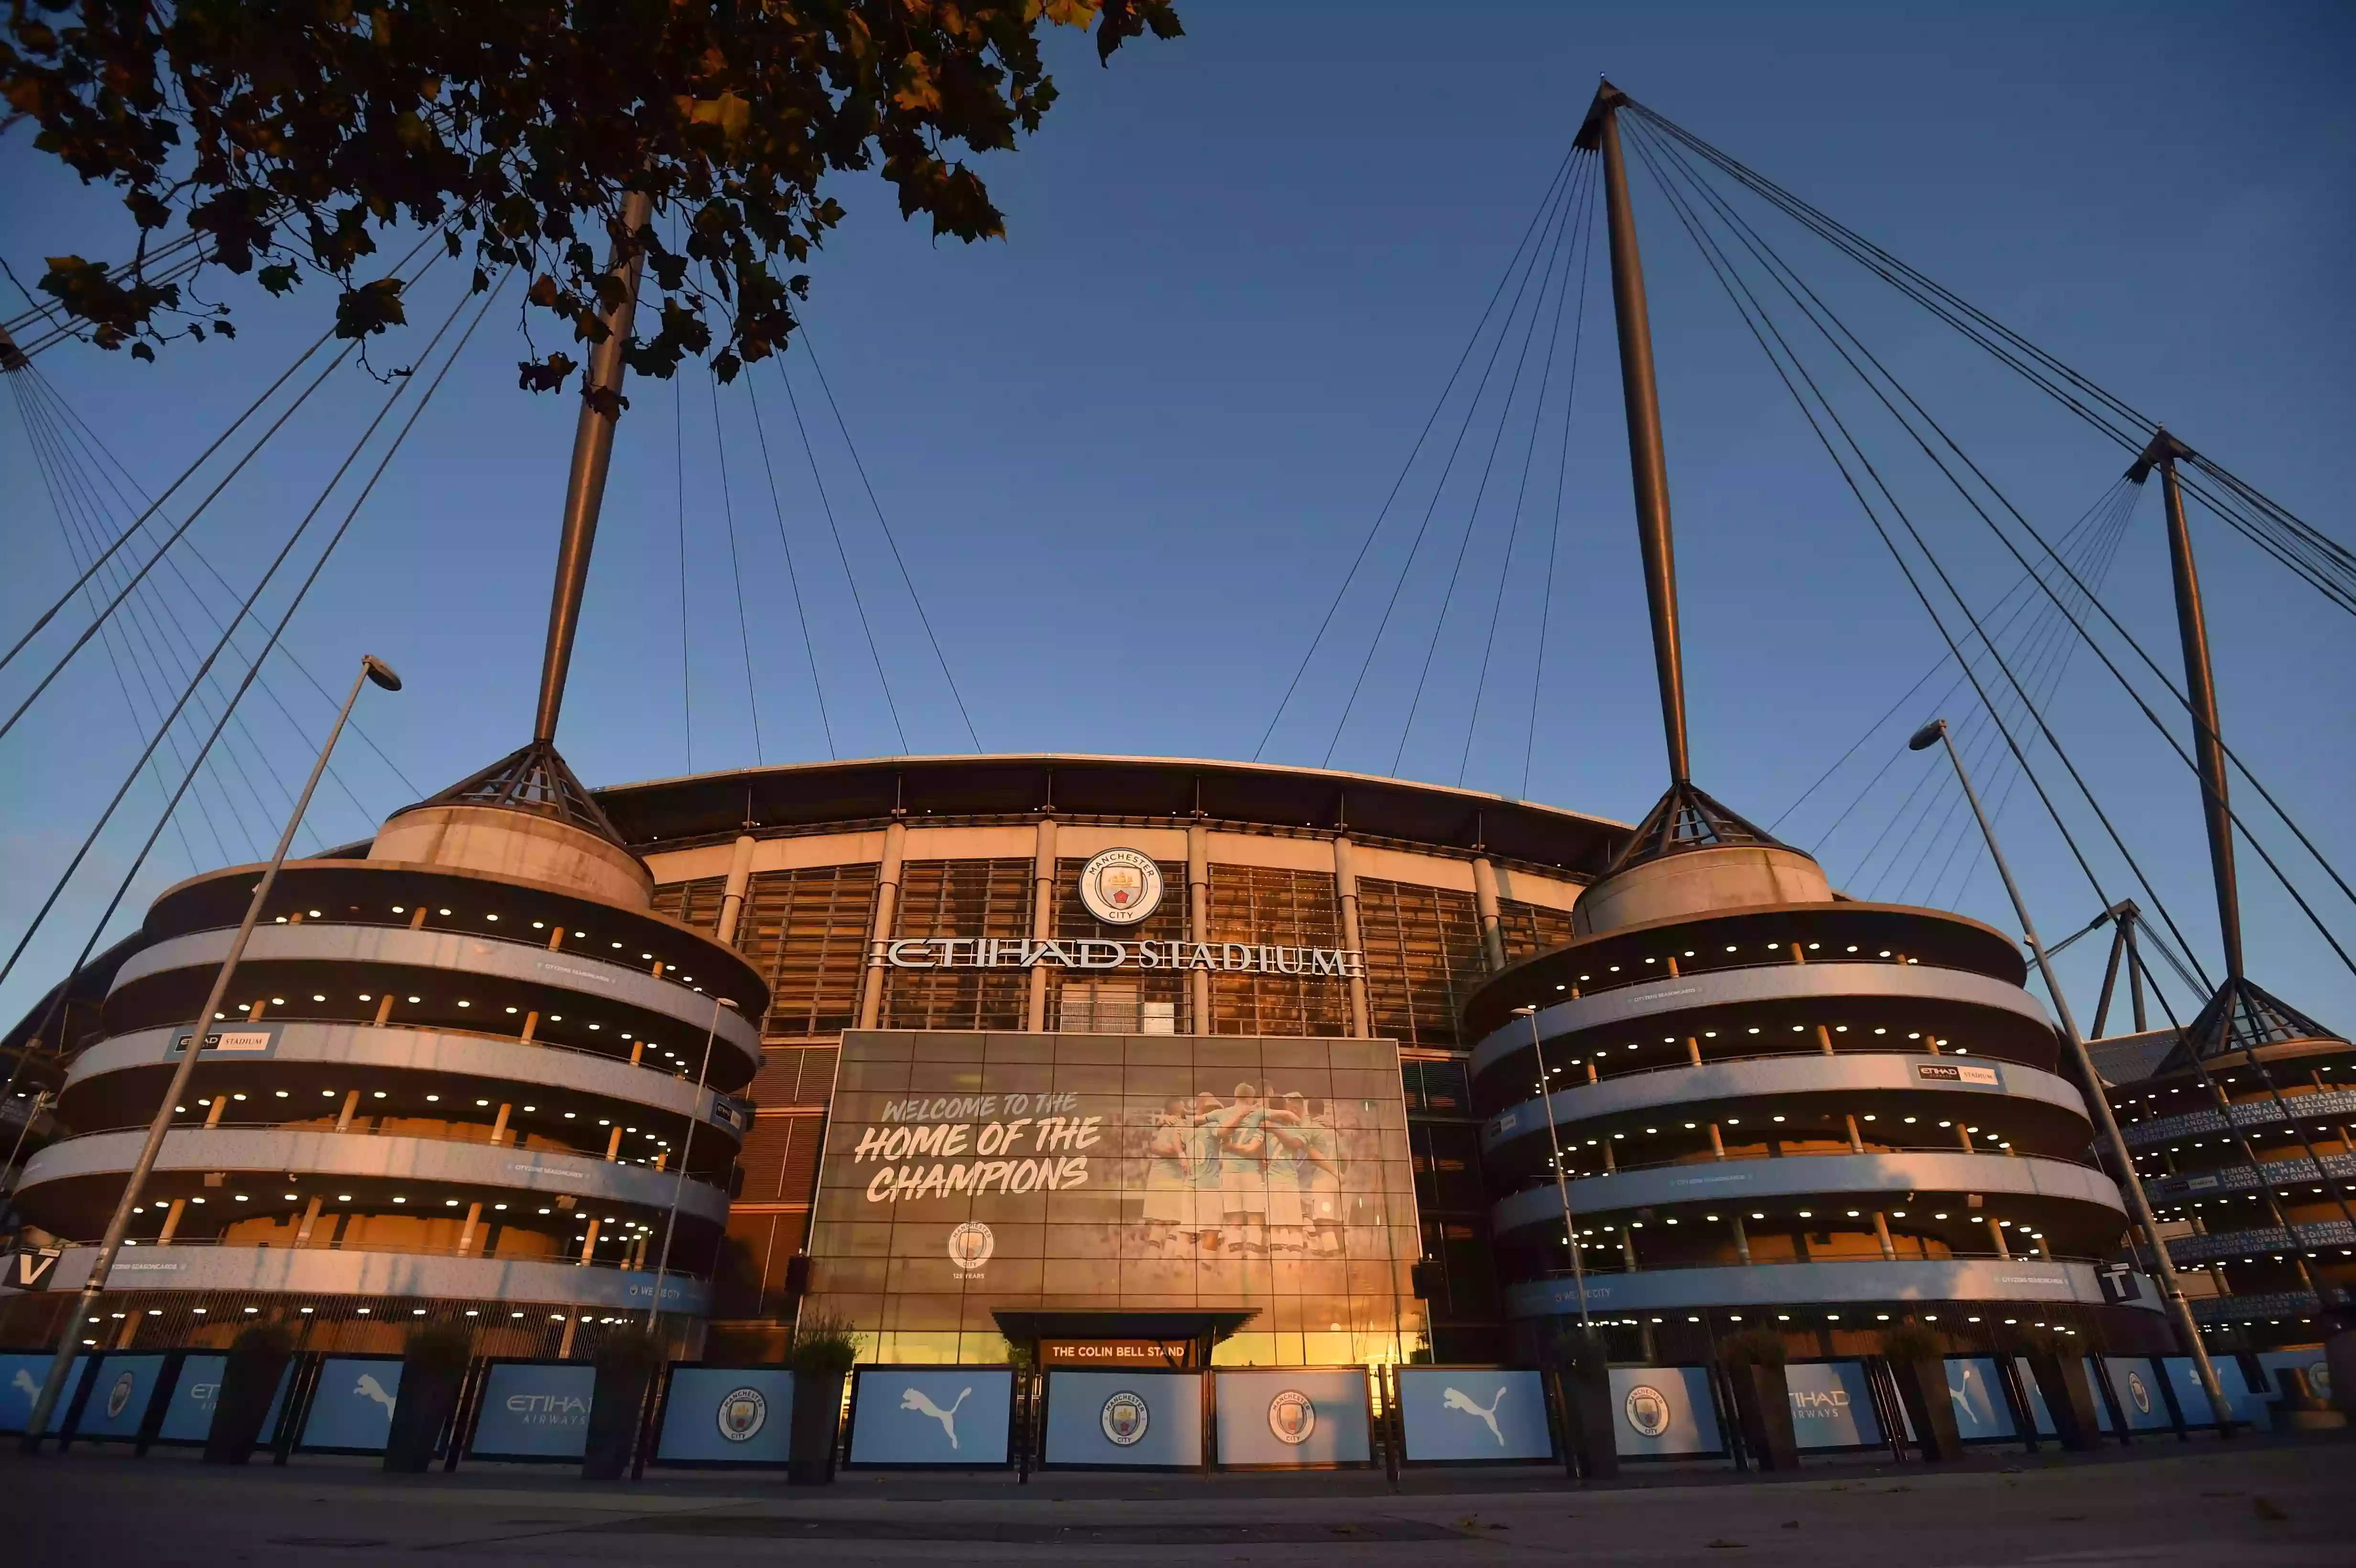 Manchester City Academy Stadium